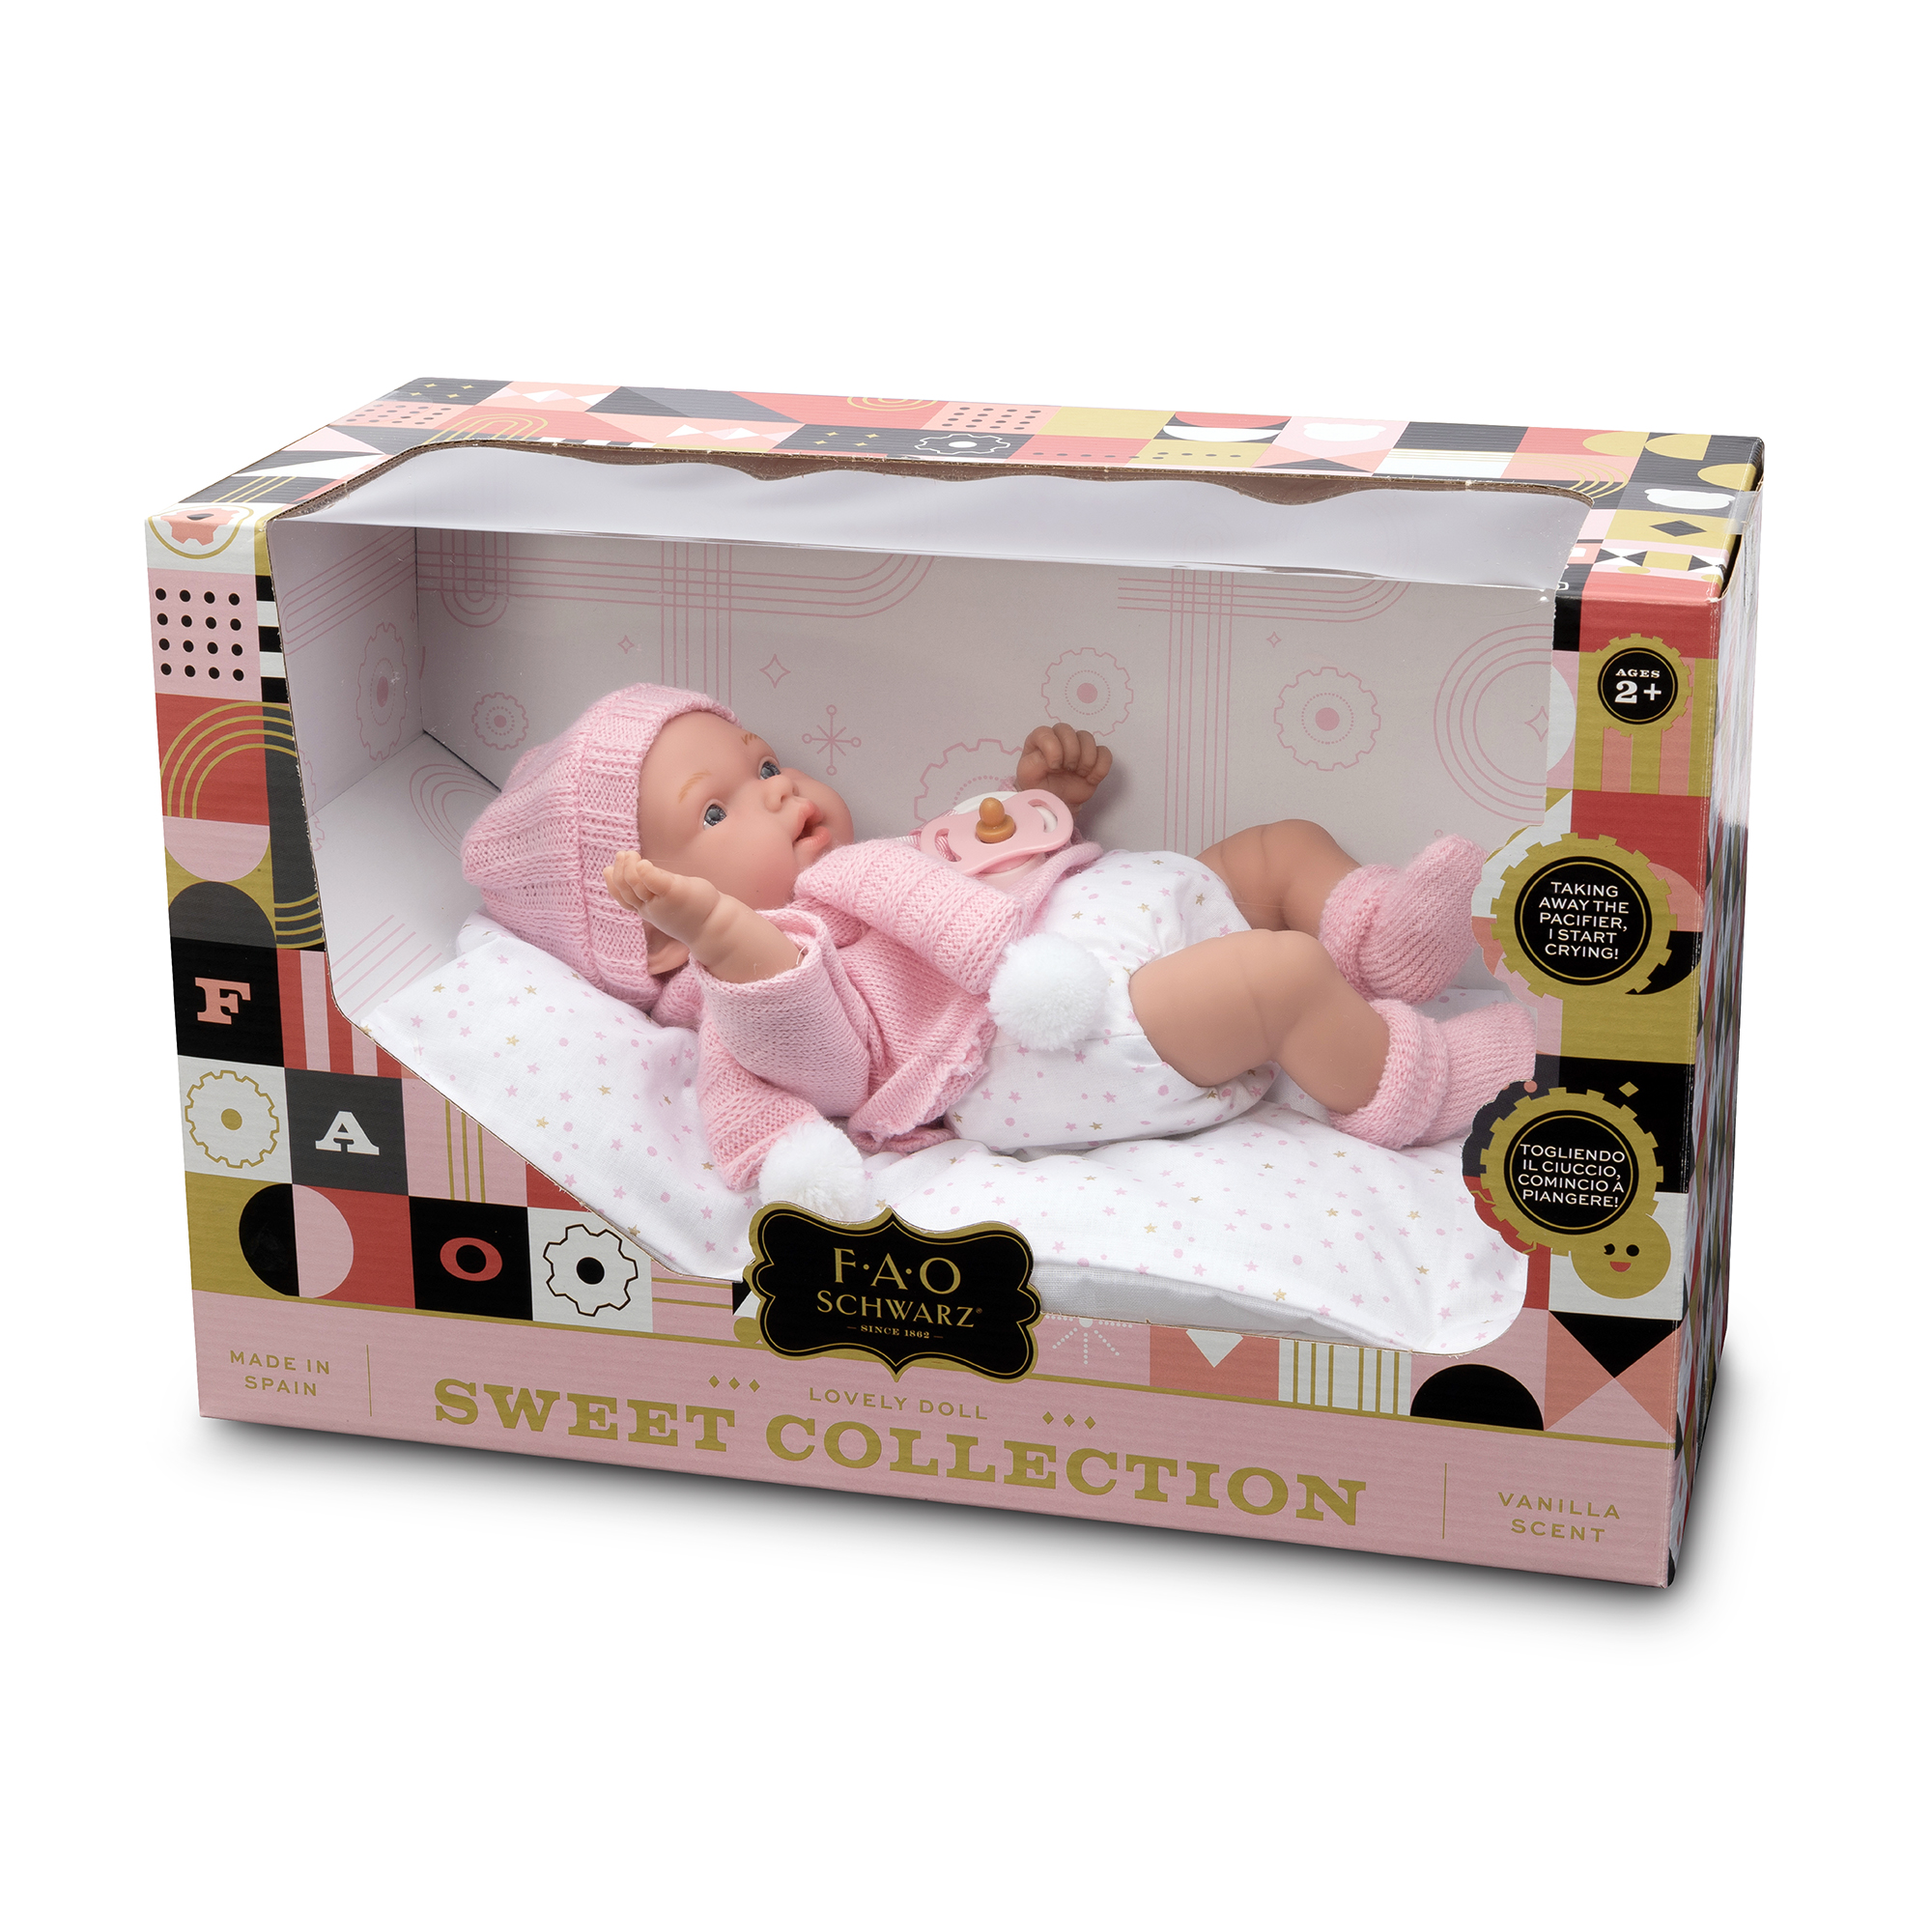 Bambola Pink Elegance Sweet Collection 28 cm - FAO Schwarz